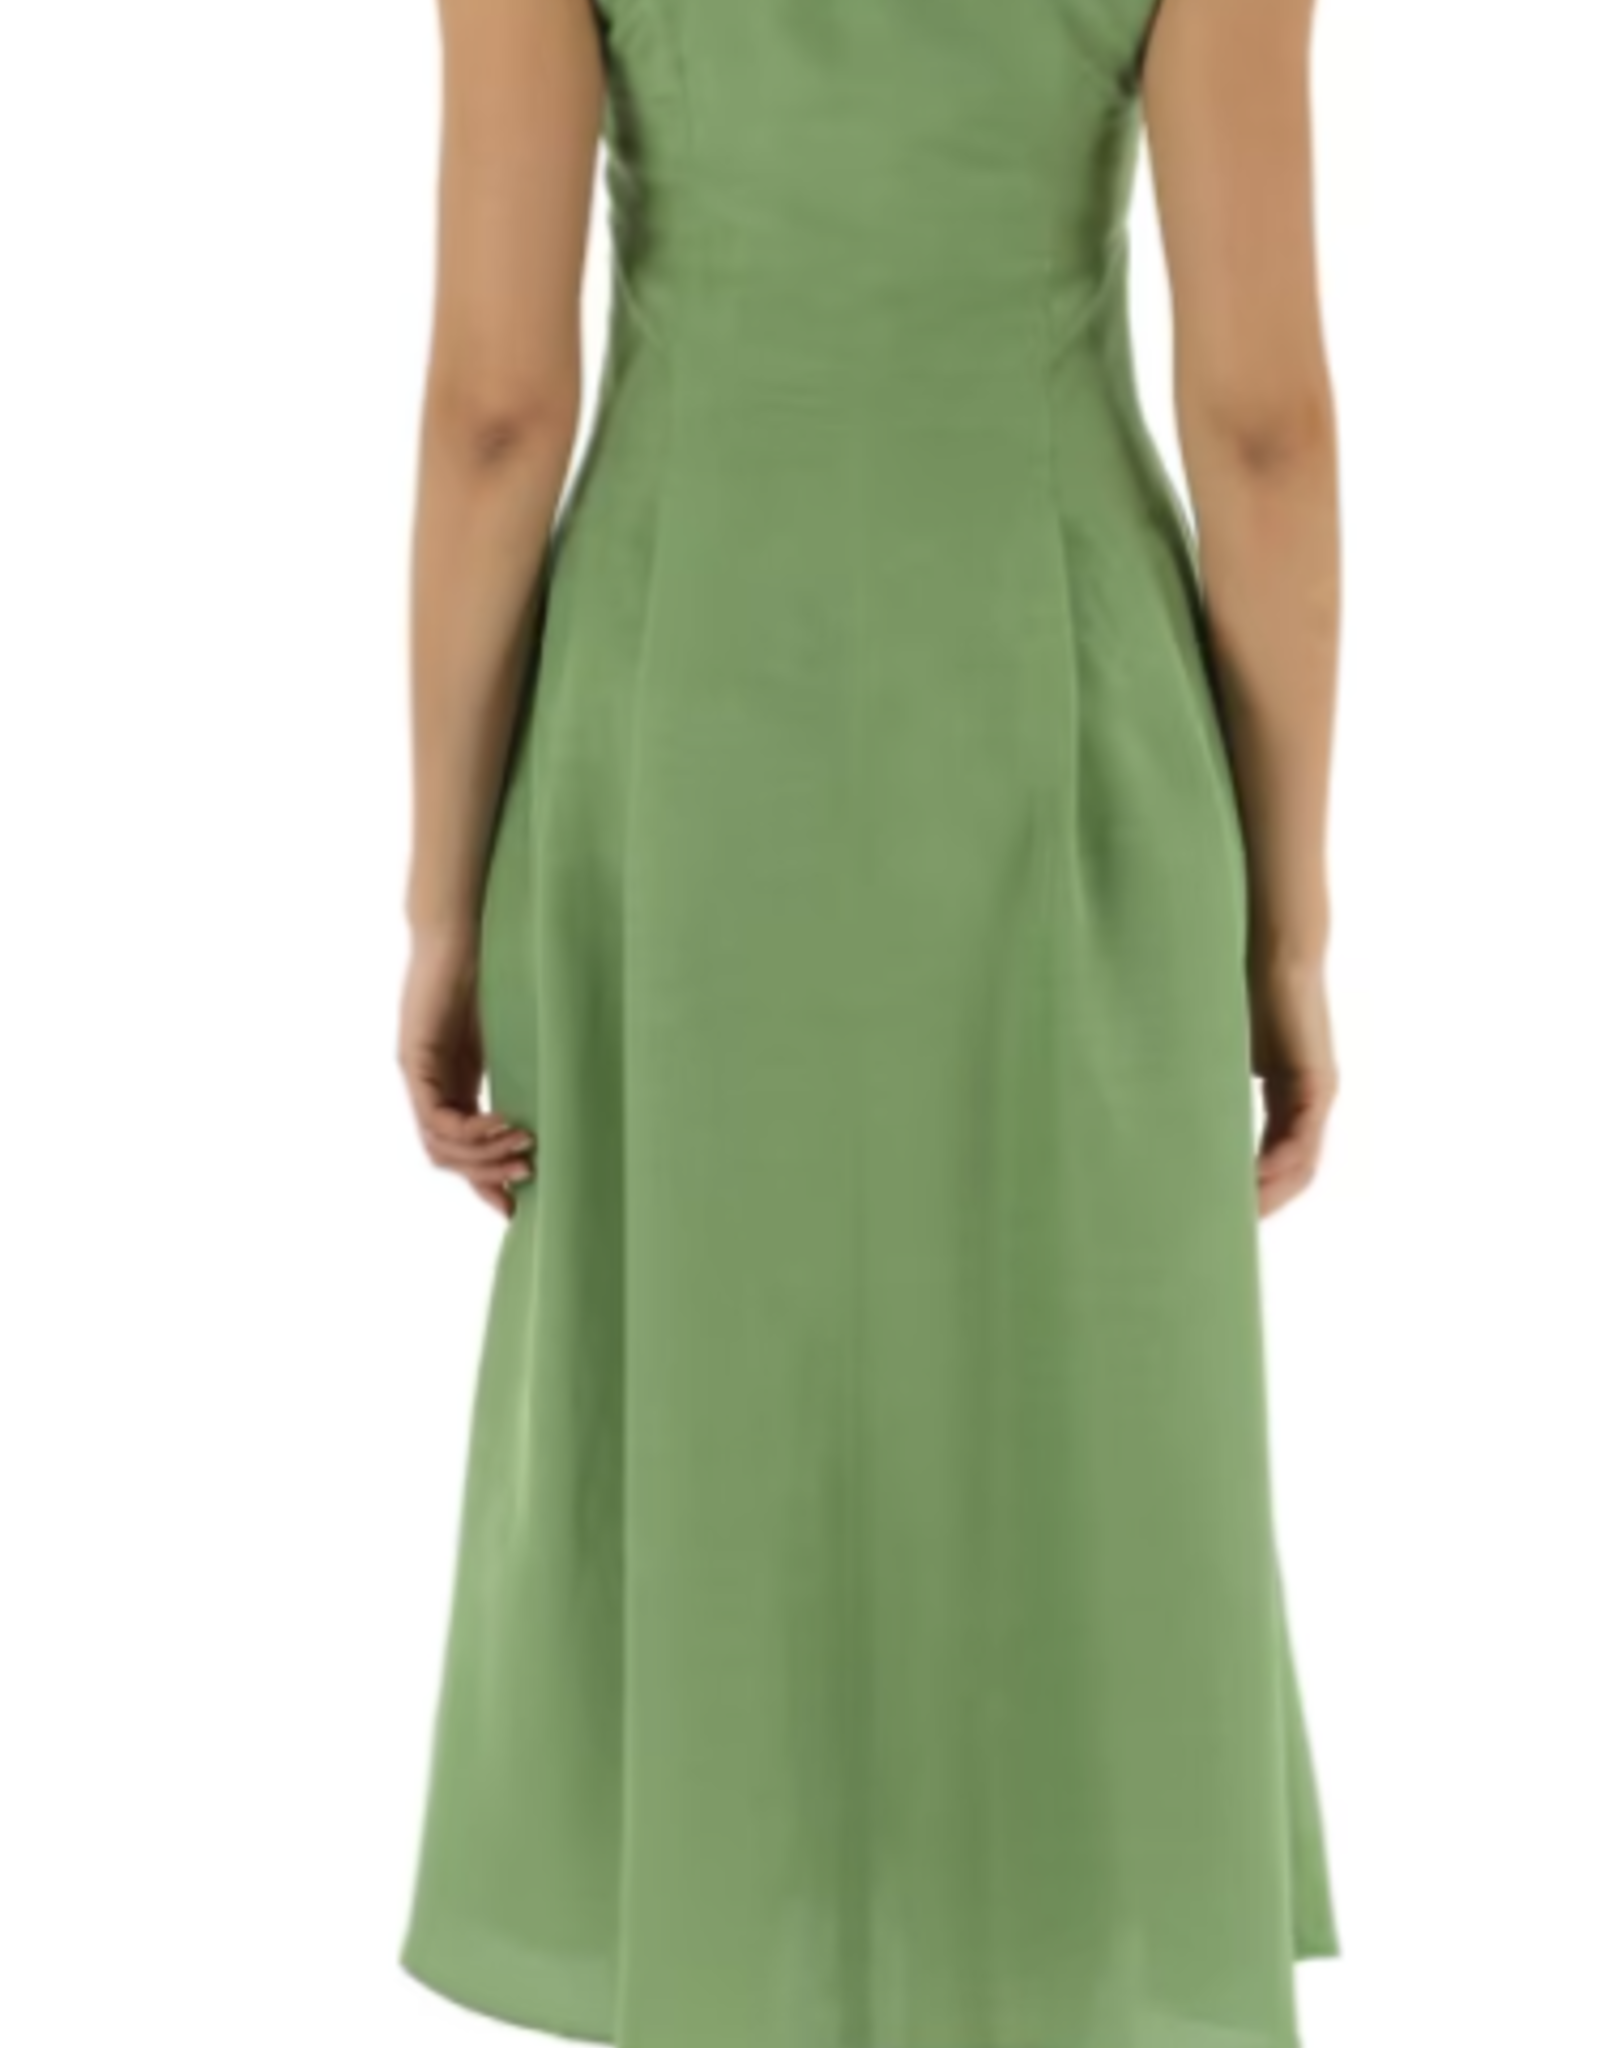 PENNYBLACK Lasize Dress Jurk Green